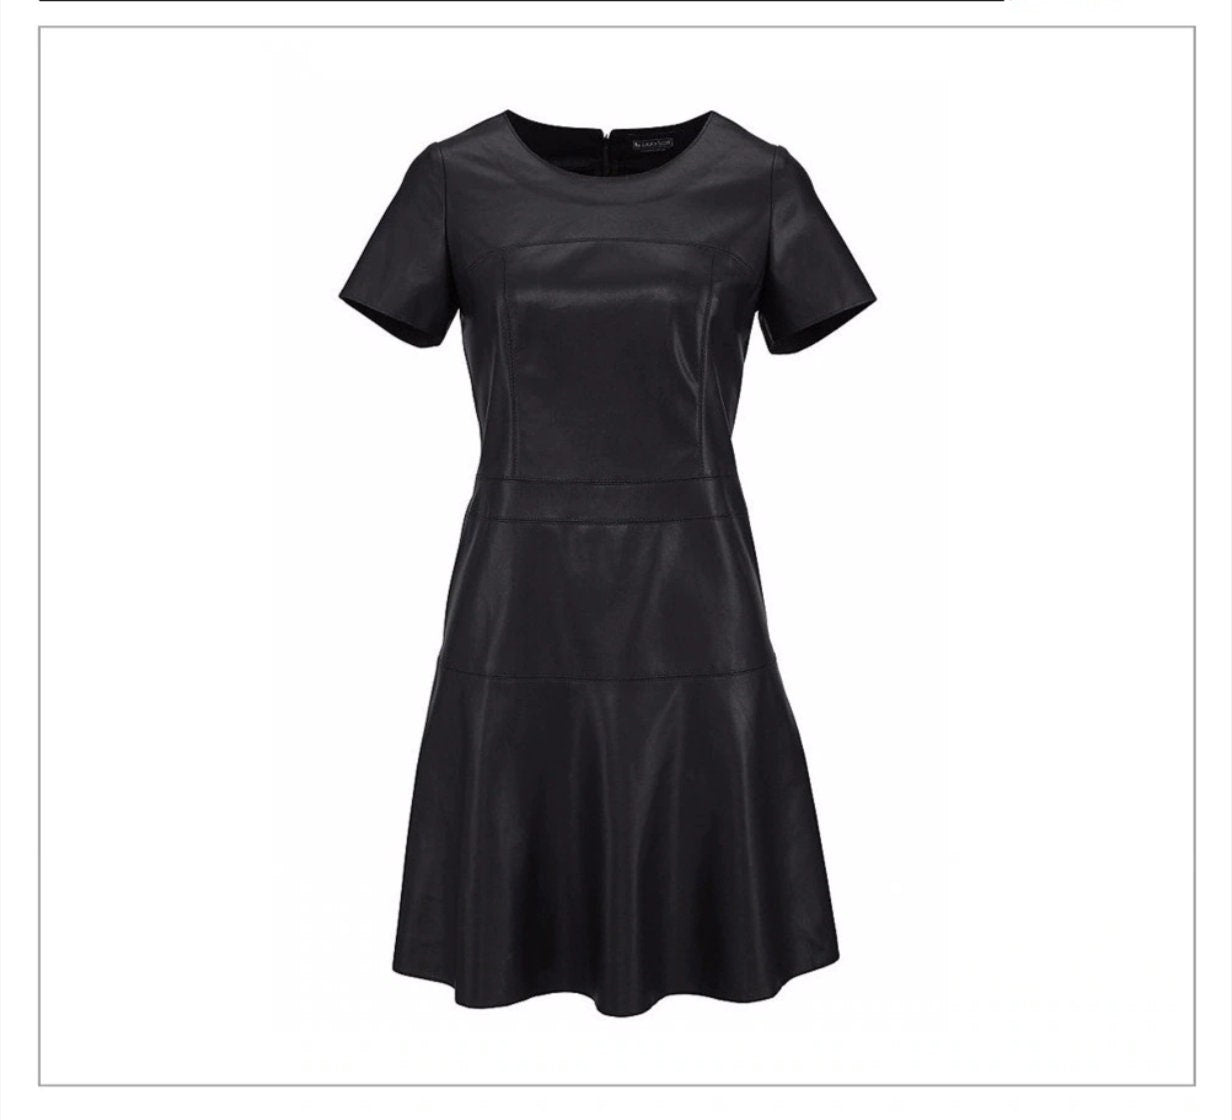 LINDSEY STREET Women Fashion Leather A-Line O-Neck Black Dress Casual Mini Dress Short Sleeve Sexy Casual Dress